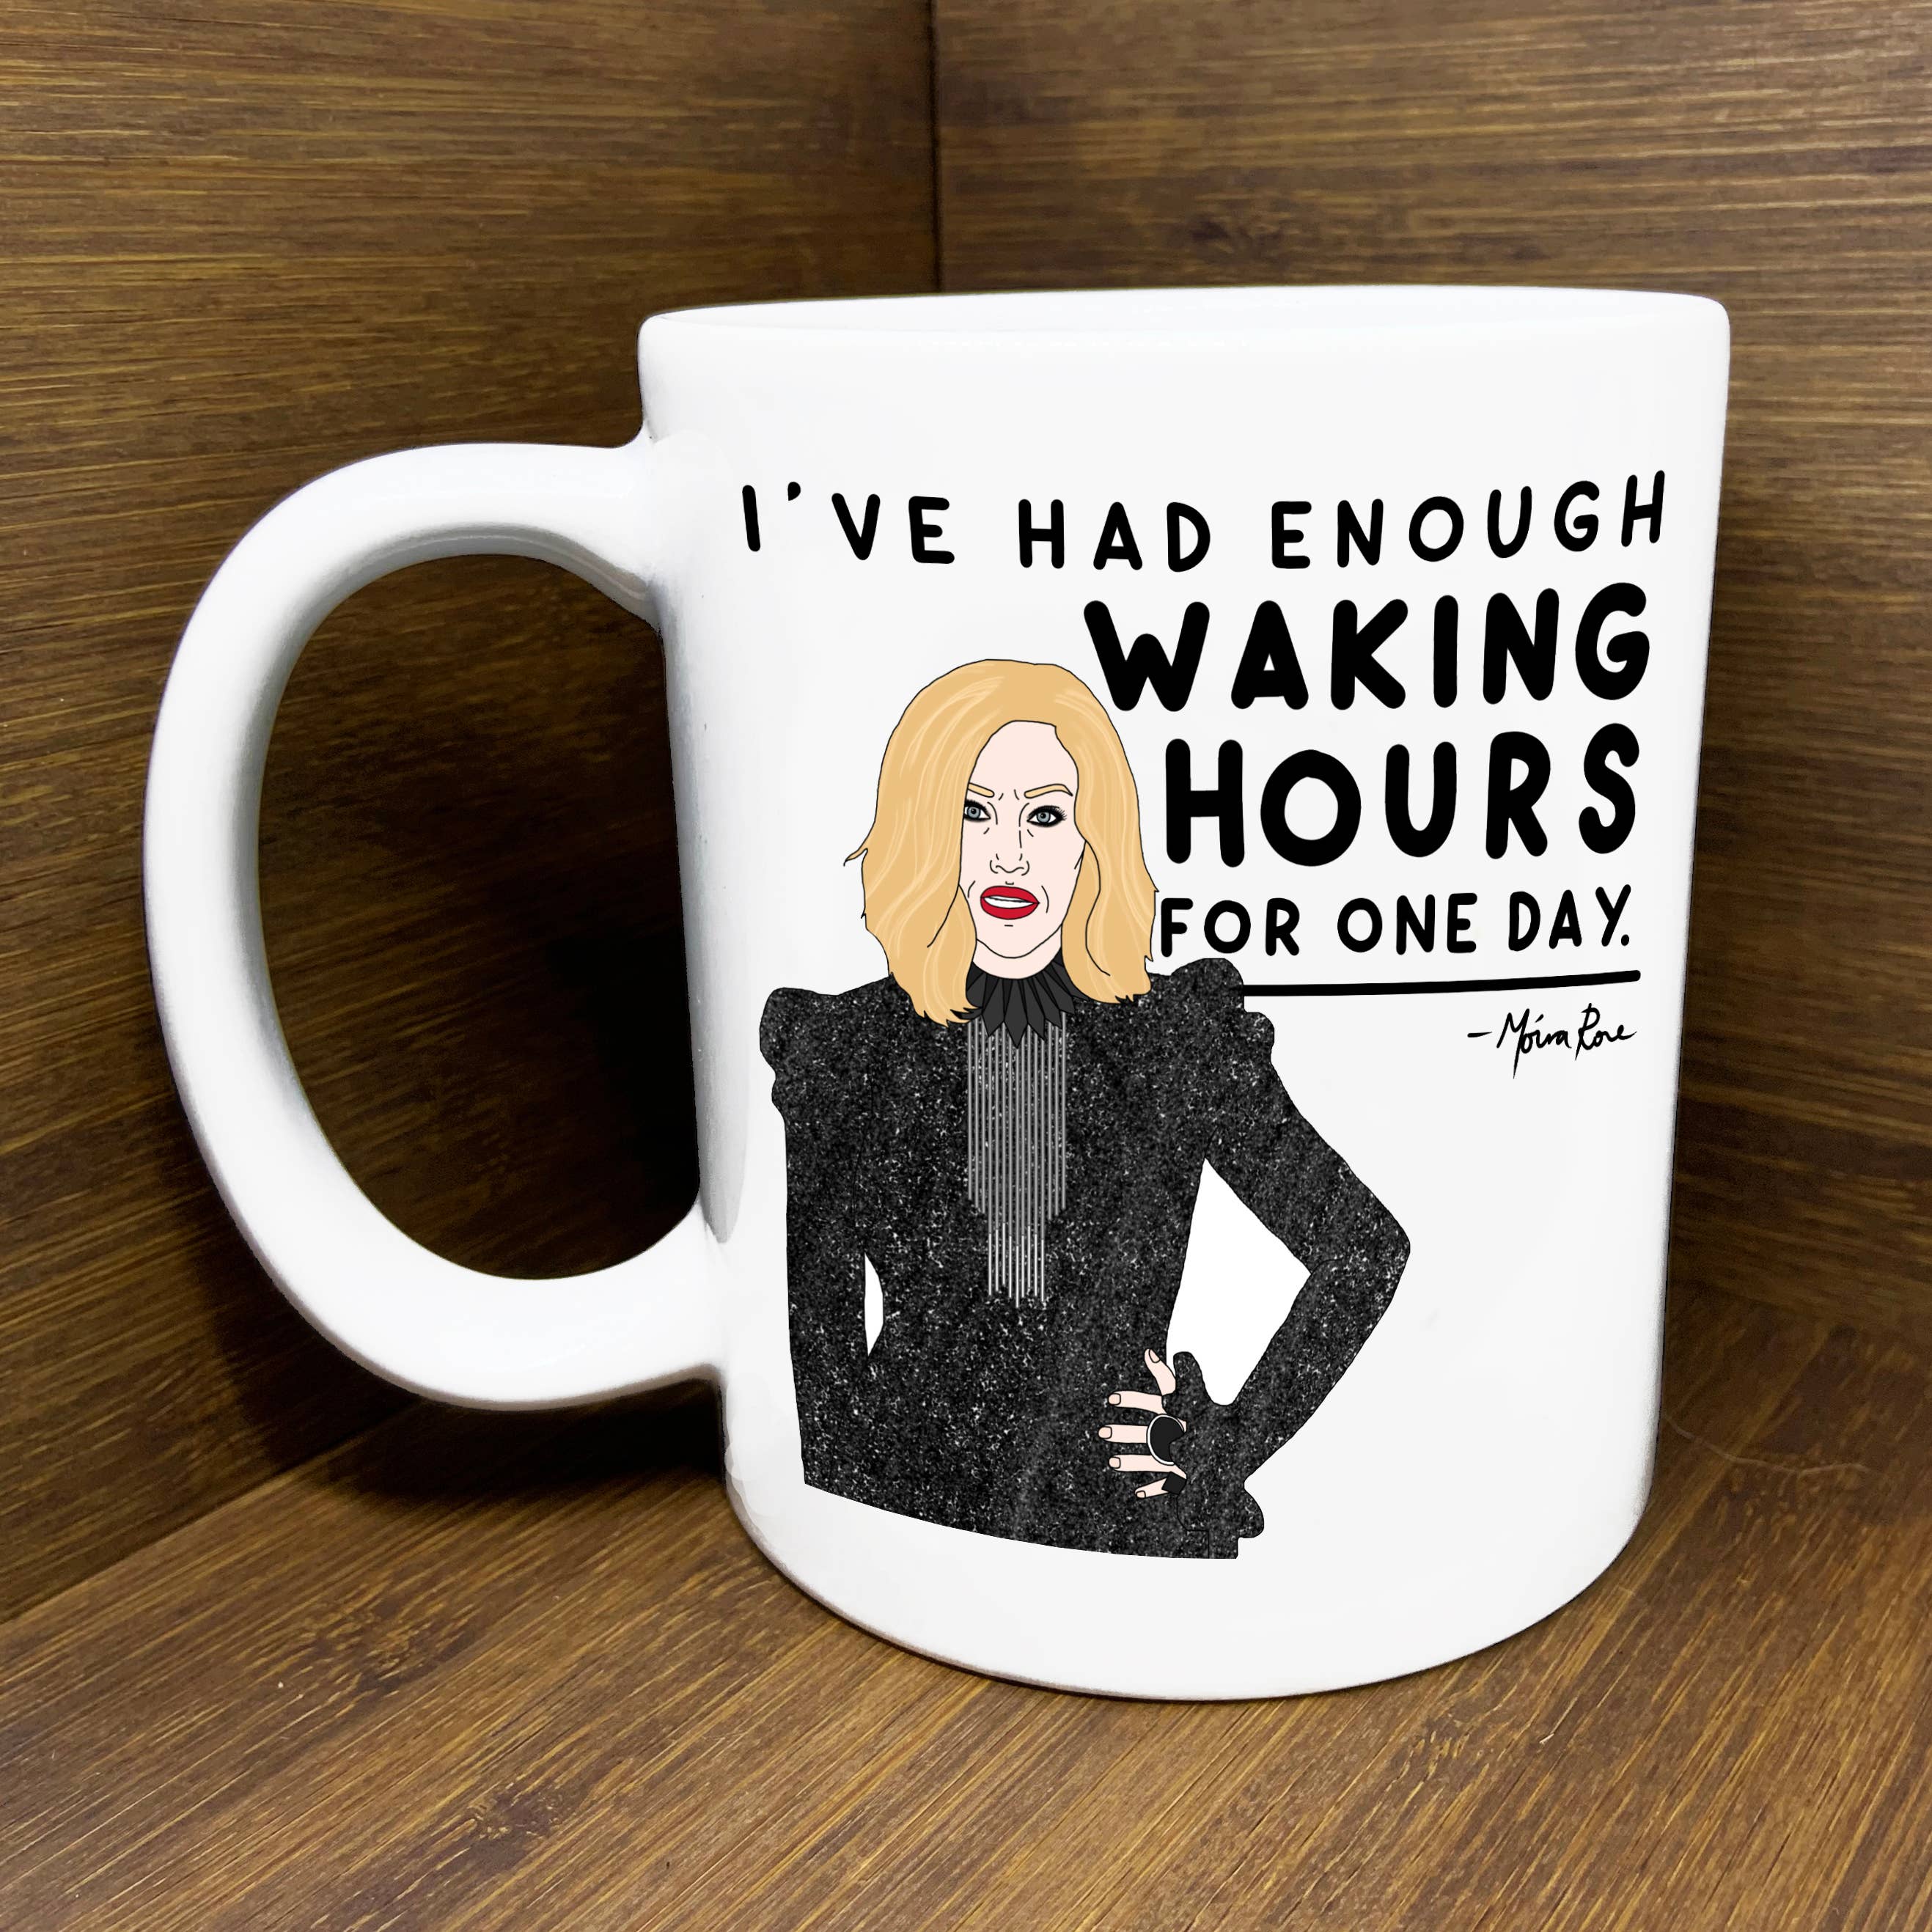 Moira "Waking Hours" Mug